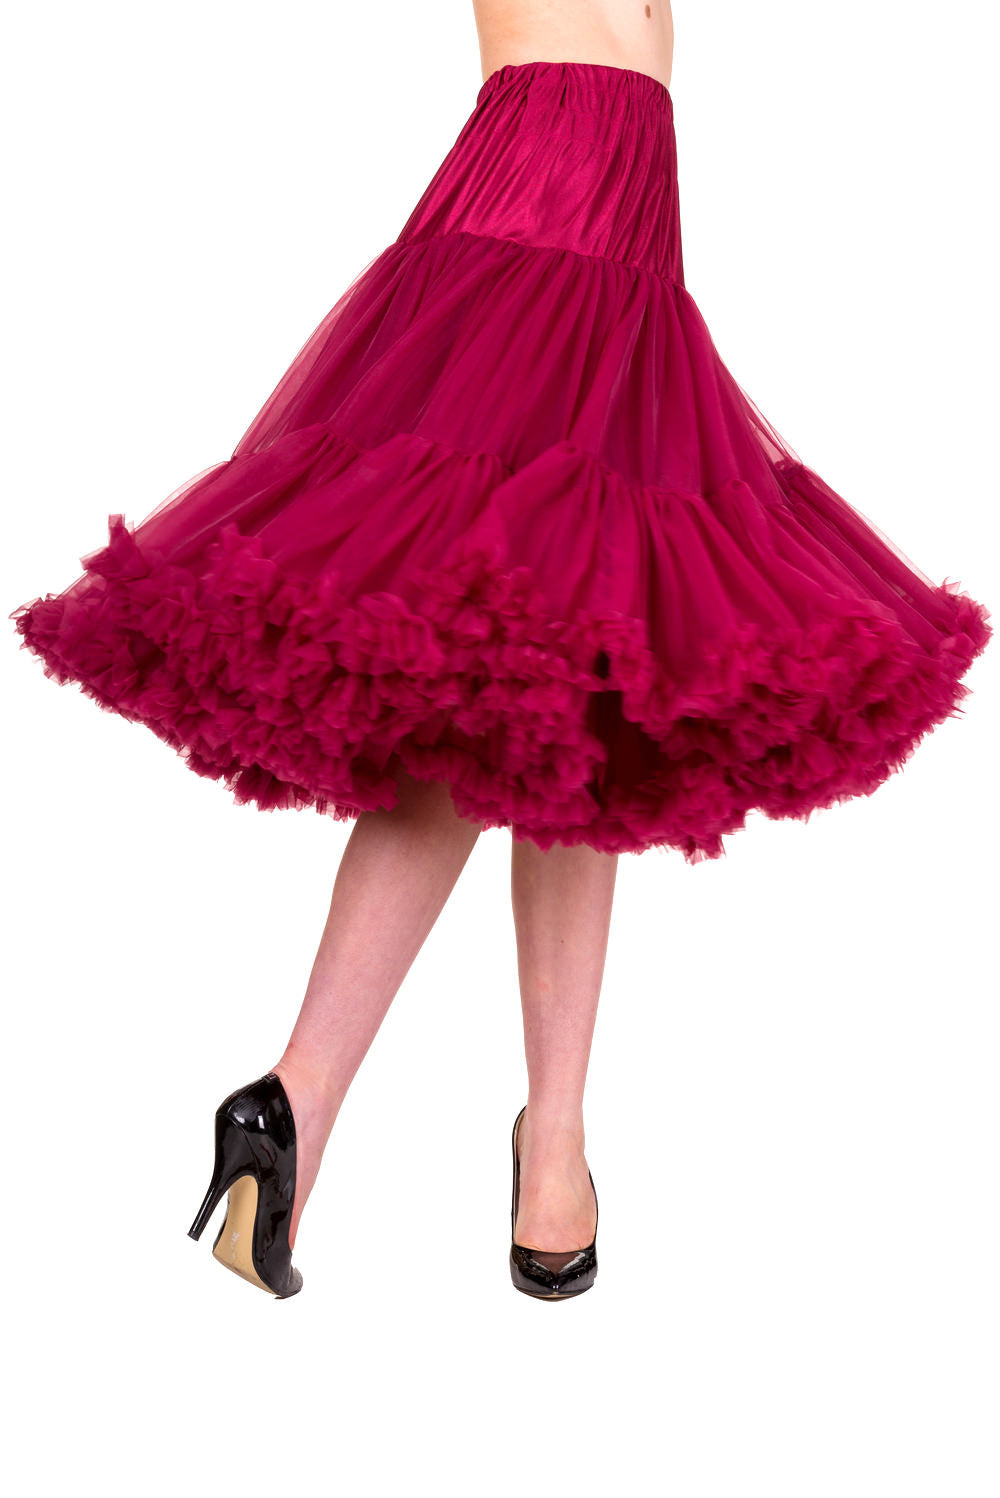 Model wearing a burgundy petticoat mid-twirl 